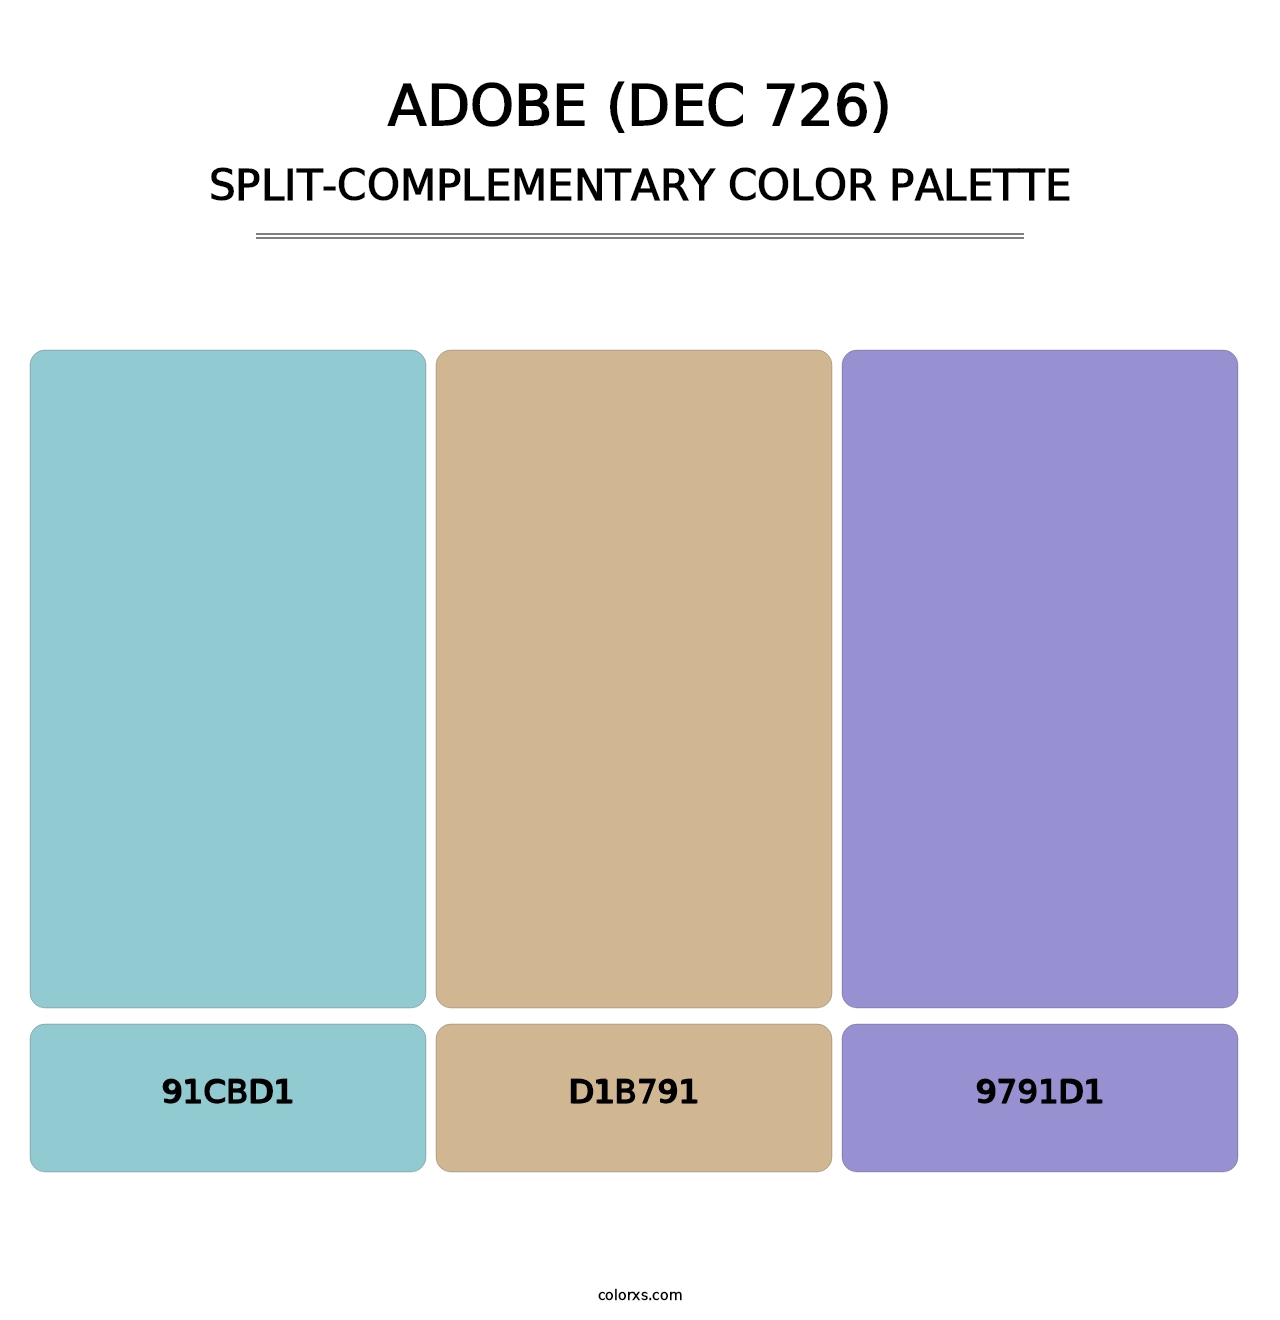 Adobe (DEC 726) - Split-Complementary Color Palette